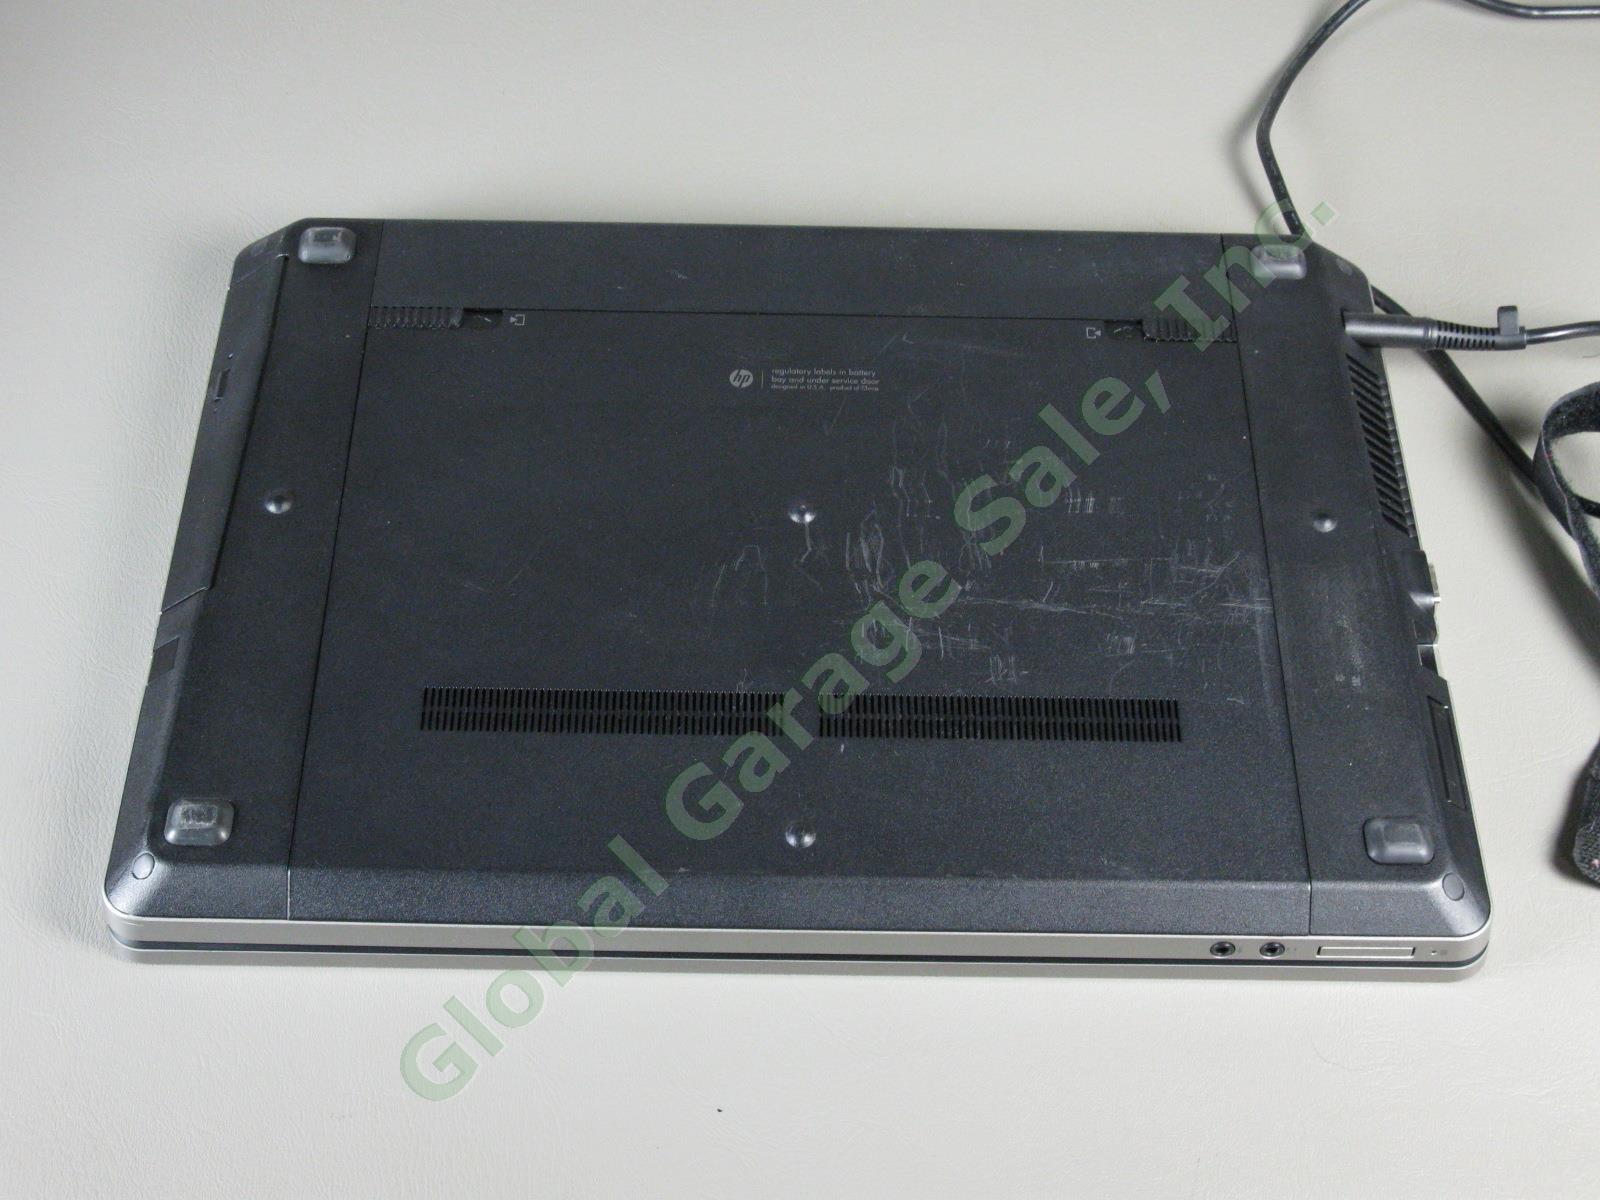 HP ProBook 4530s Laptop Computer Intel i5 2.30GHz 300GB HDD 2GB RAM Win 10 Pro 6